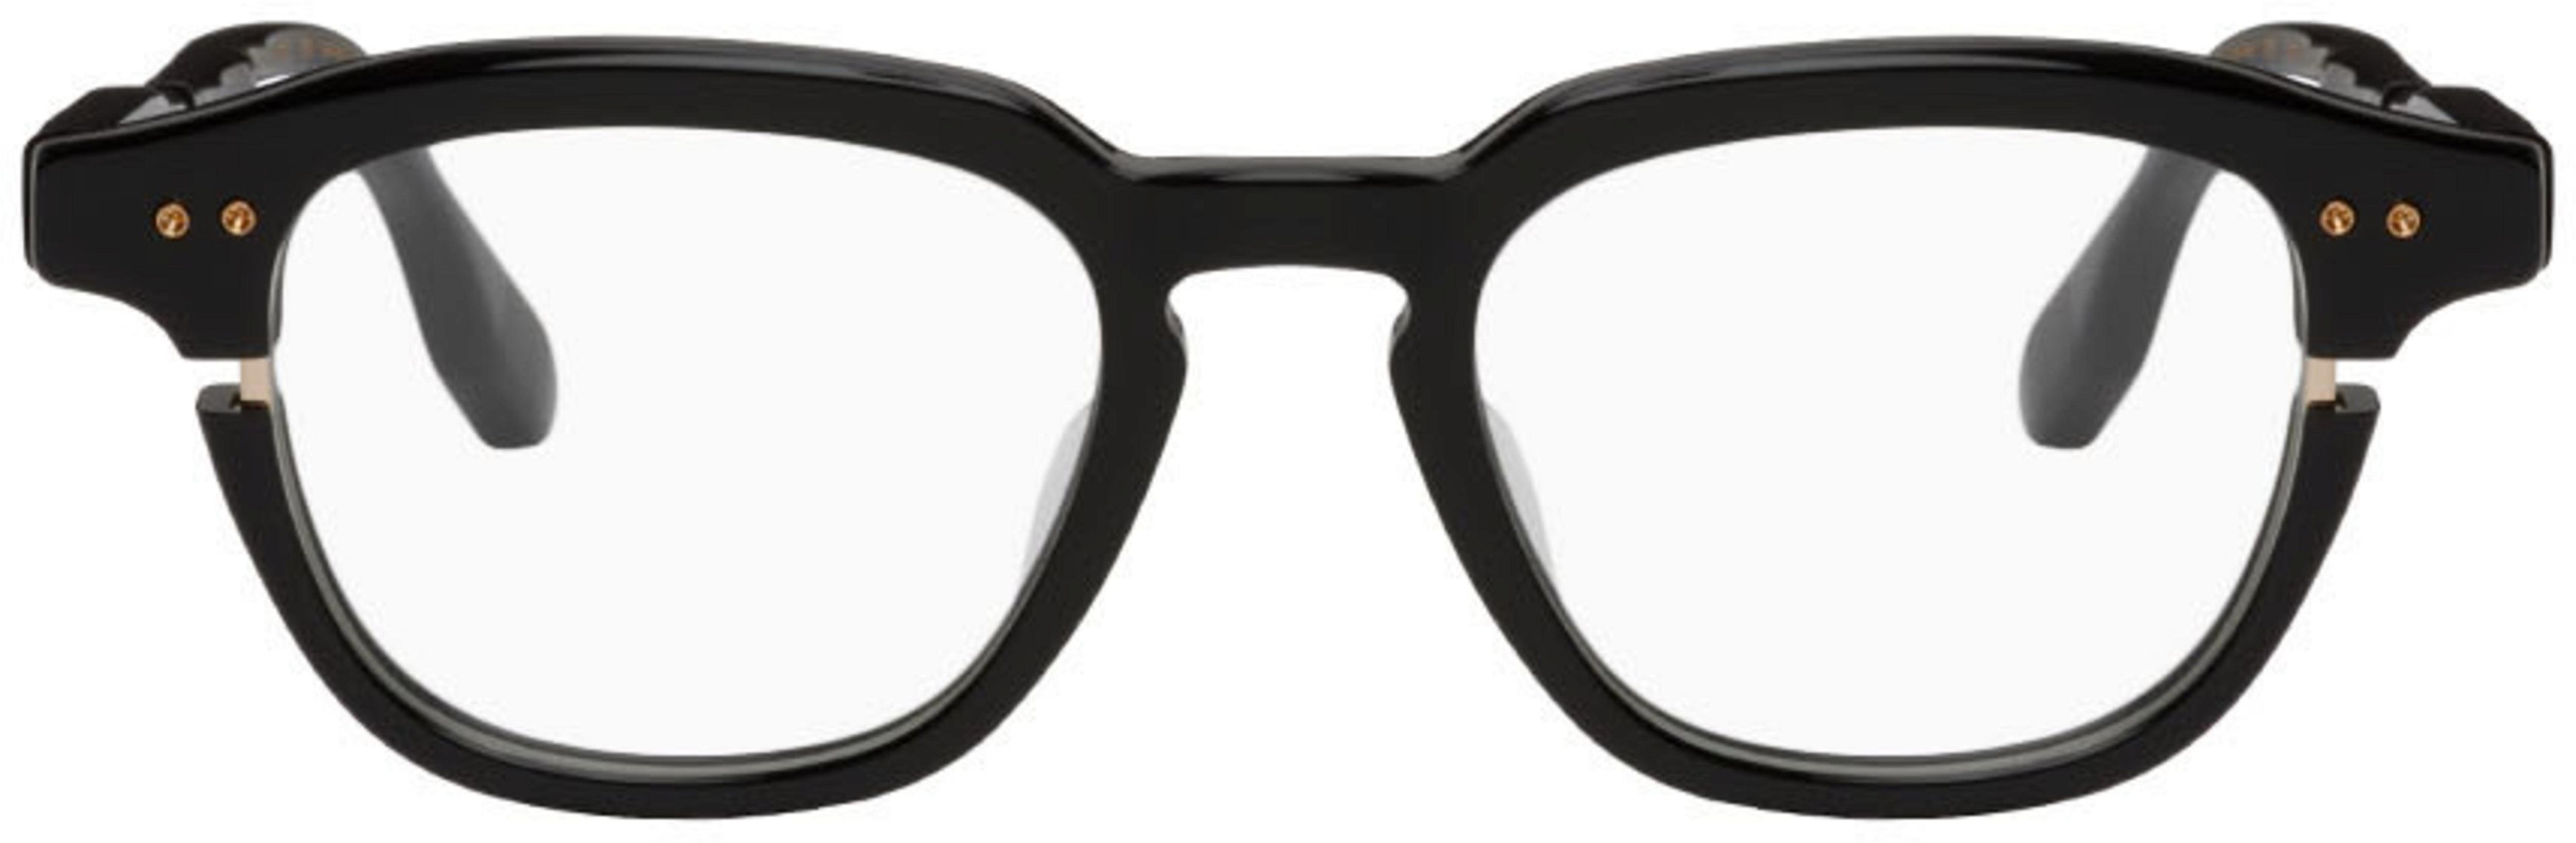 Black Lineus Glasses by DITA